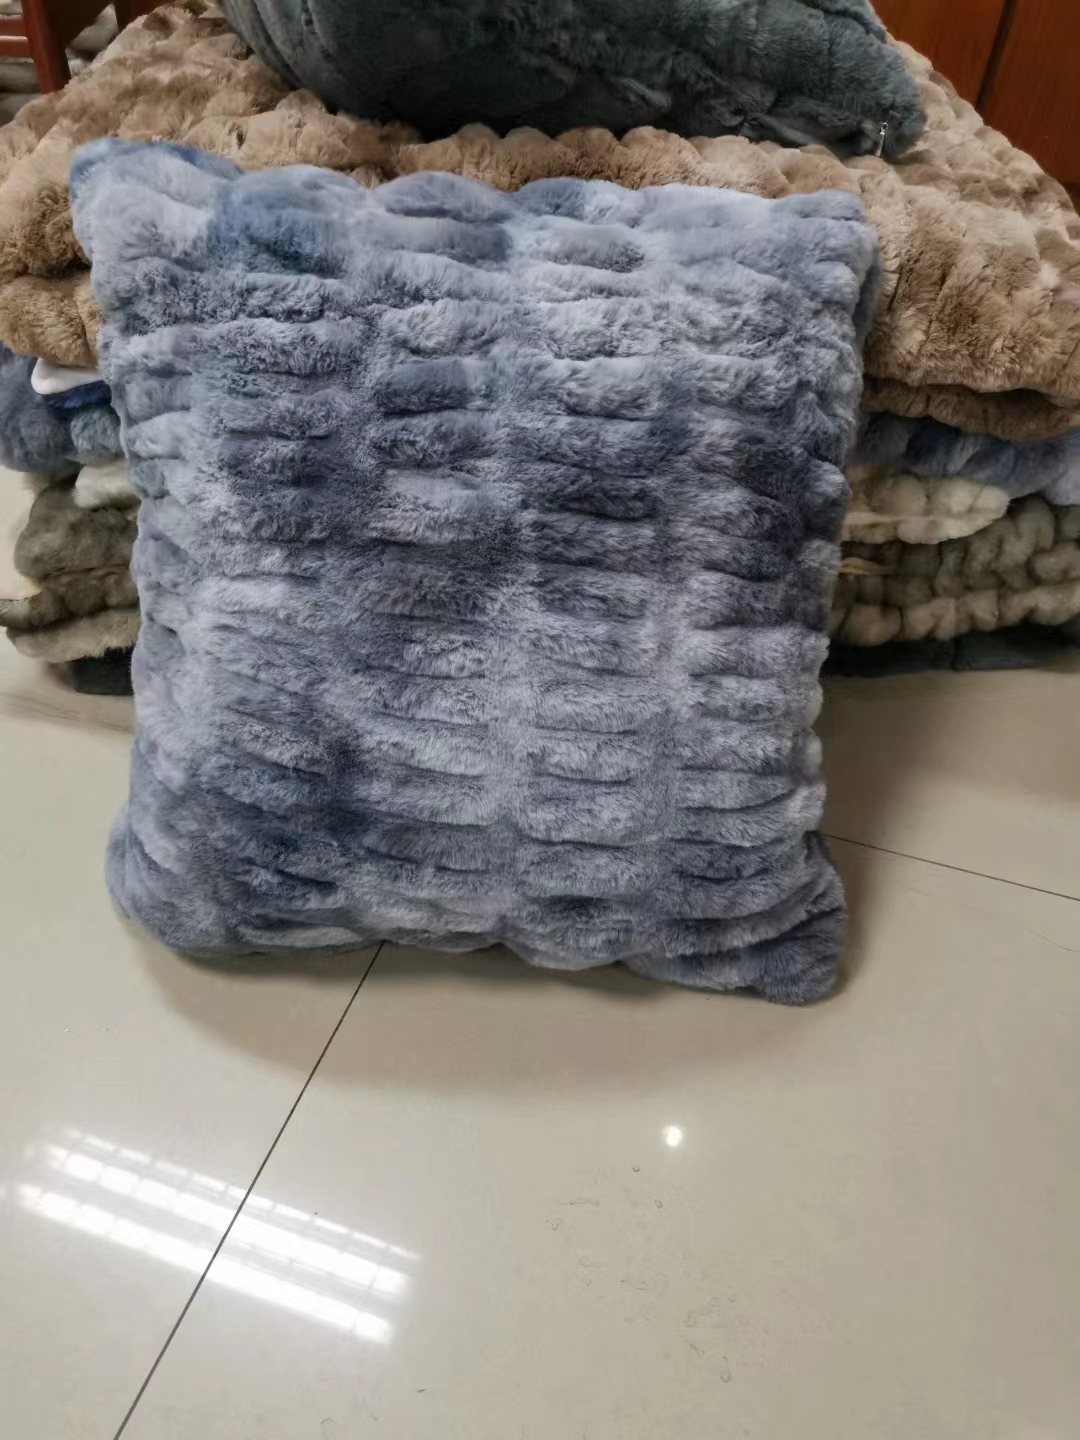 pv plush fabric blanket cushion cover